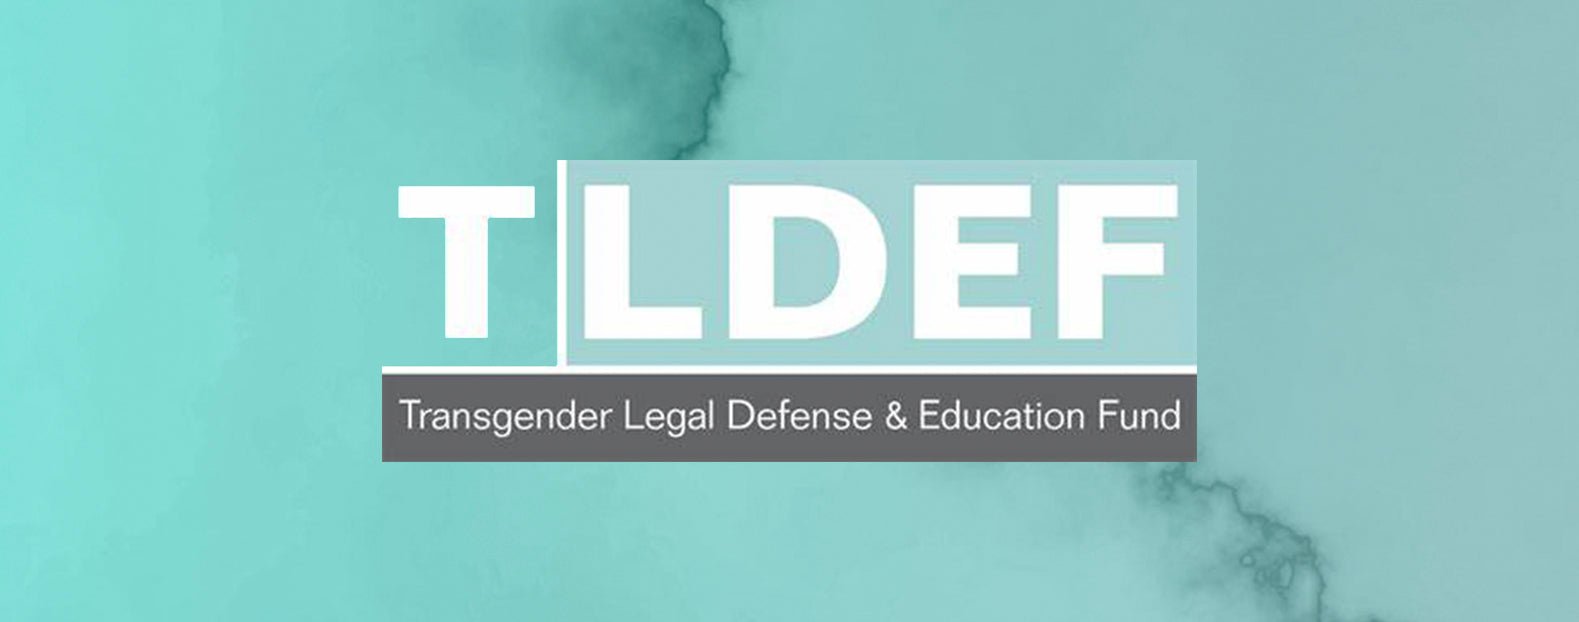 Transgender Legal Defense & Education Fund | Crystal Bar Soap